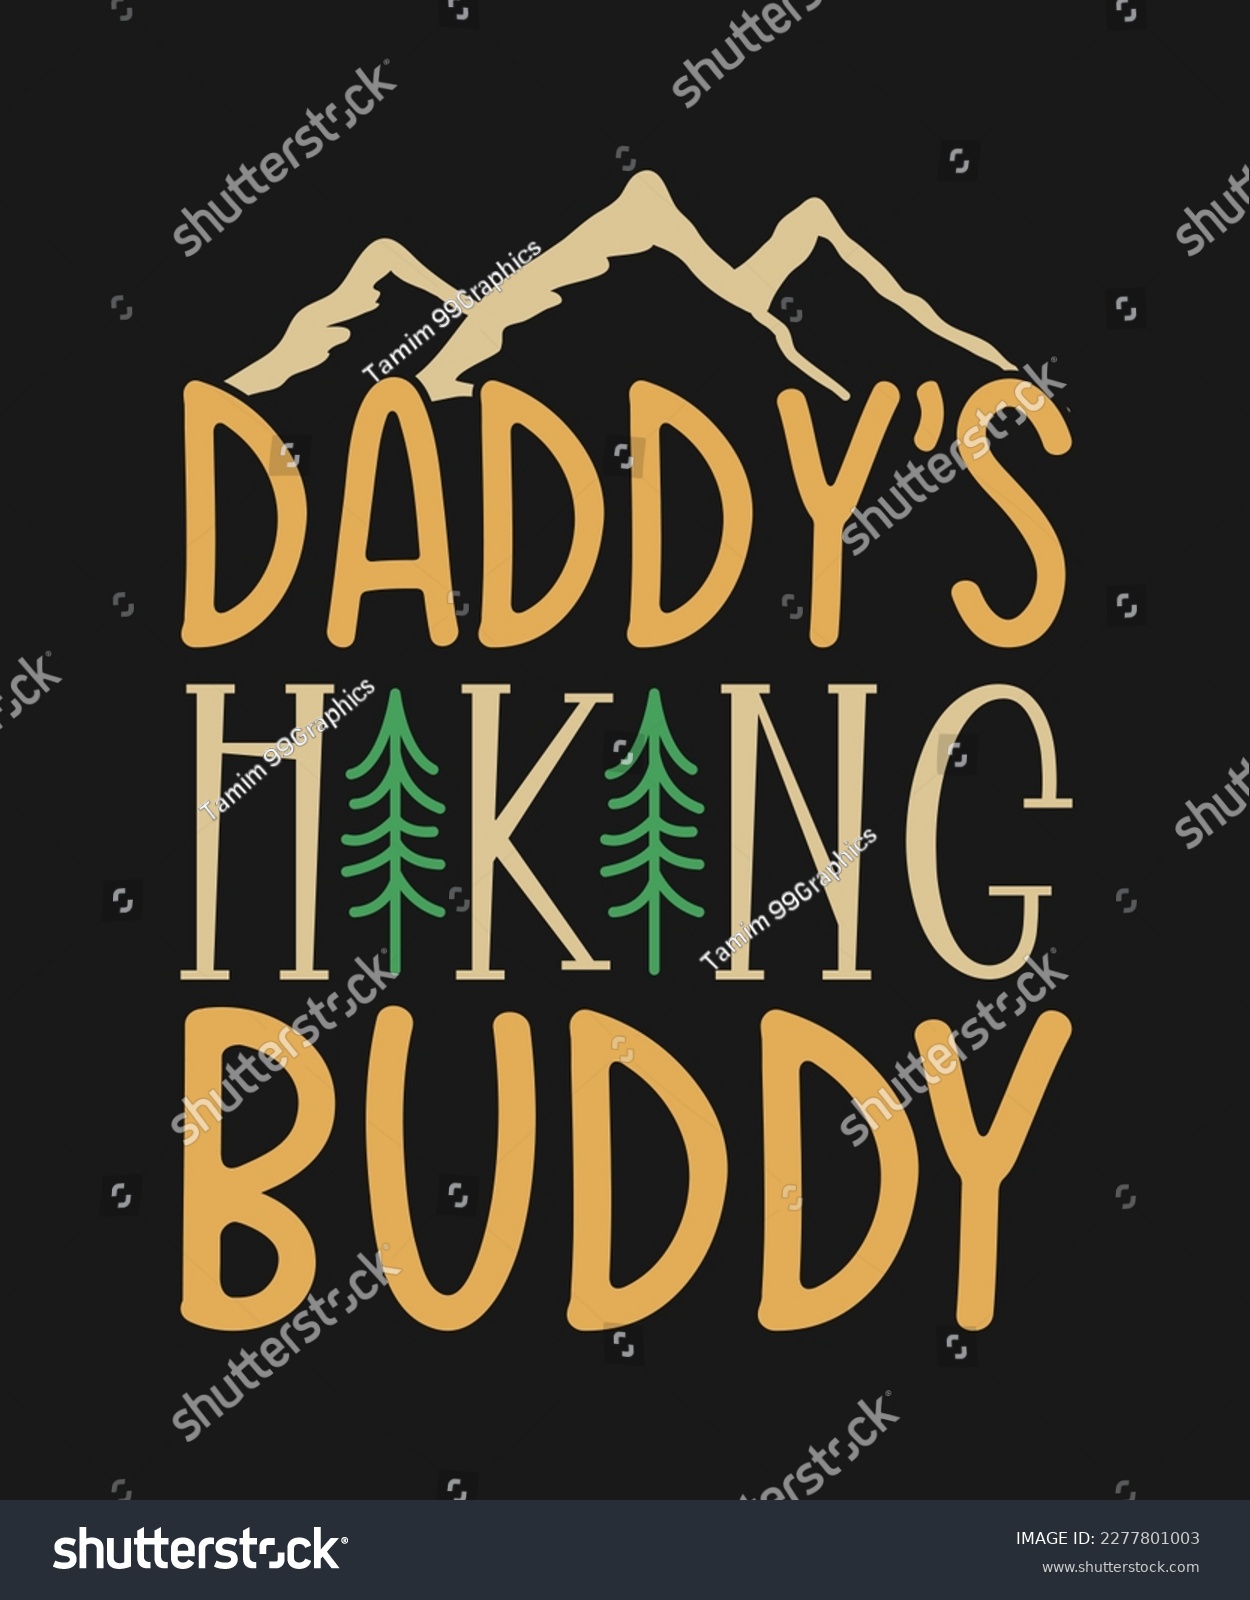 SVG of Daddy's hiking buddy camping SVG t shirt design.
Travelling and Hiking t shirt design.
Camping SVG design. svg